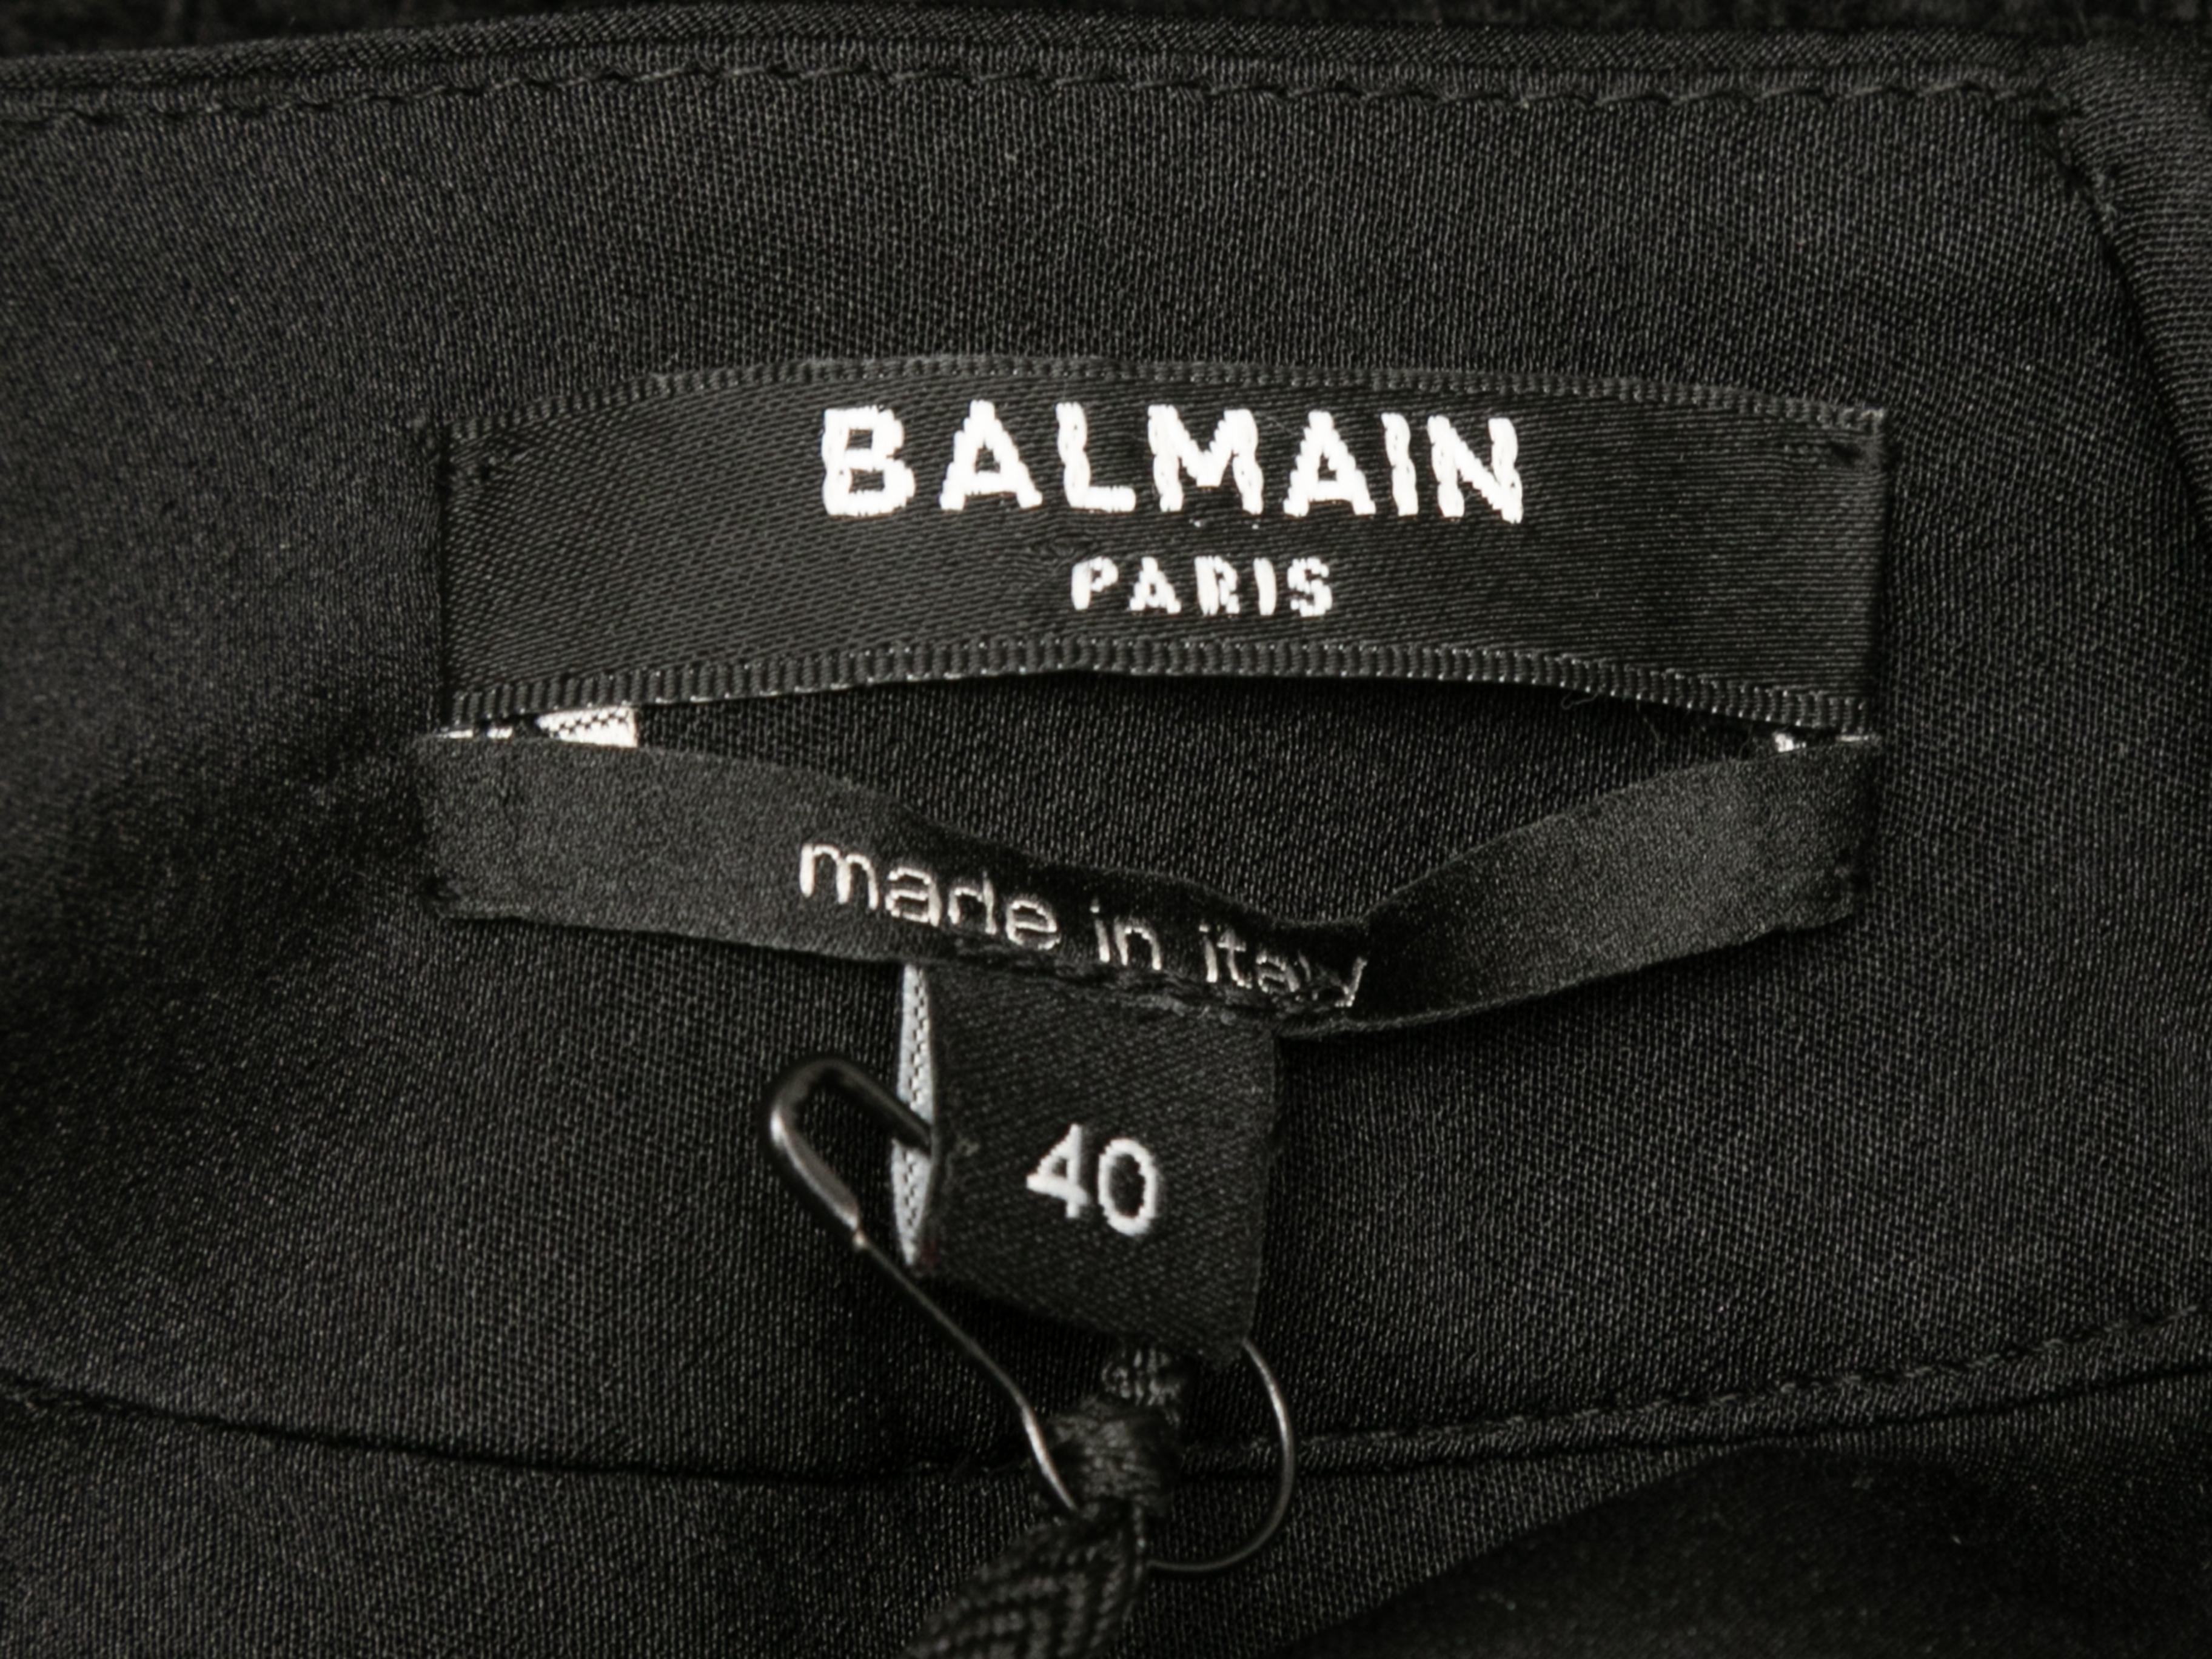 Black sleeveless dress by Balmain. Scoop neckline. Dual welt pockets. Zip closure at back. 34